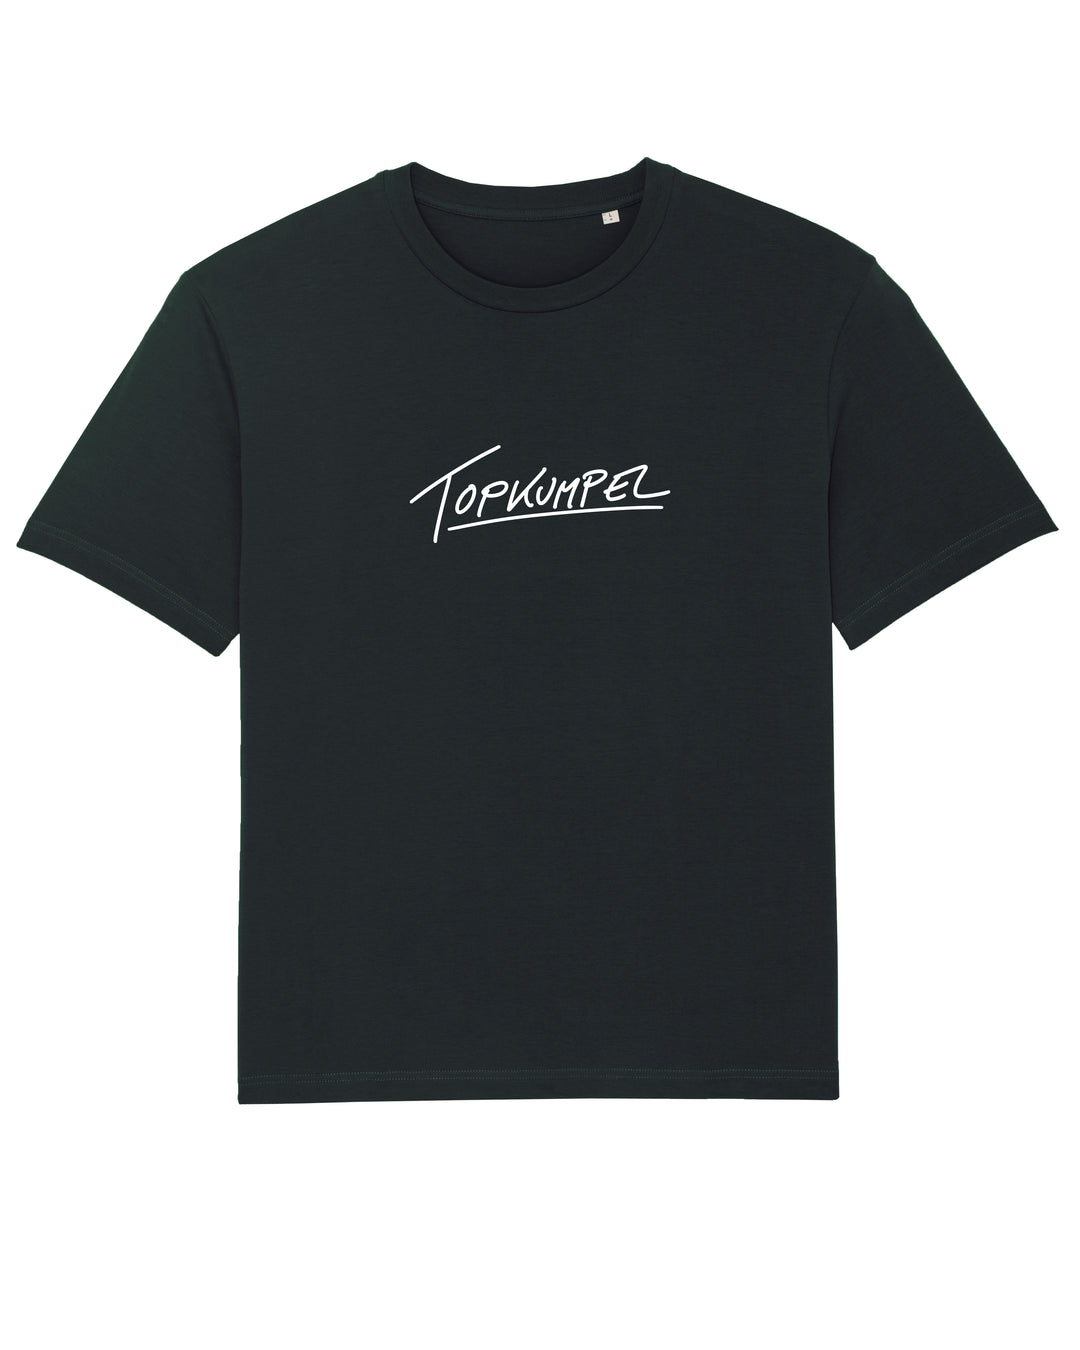 FCKNG SERIOUS - Topkumpel T-Shirt black (Stitched)